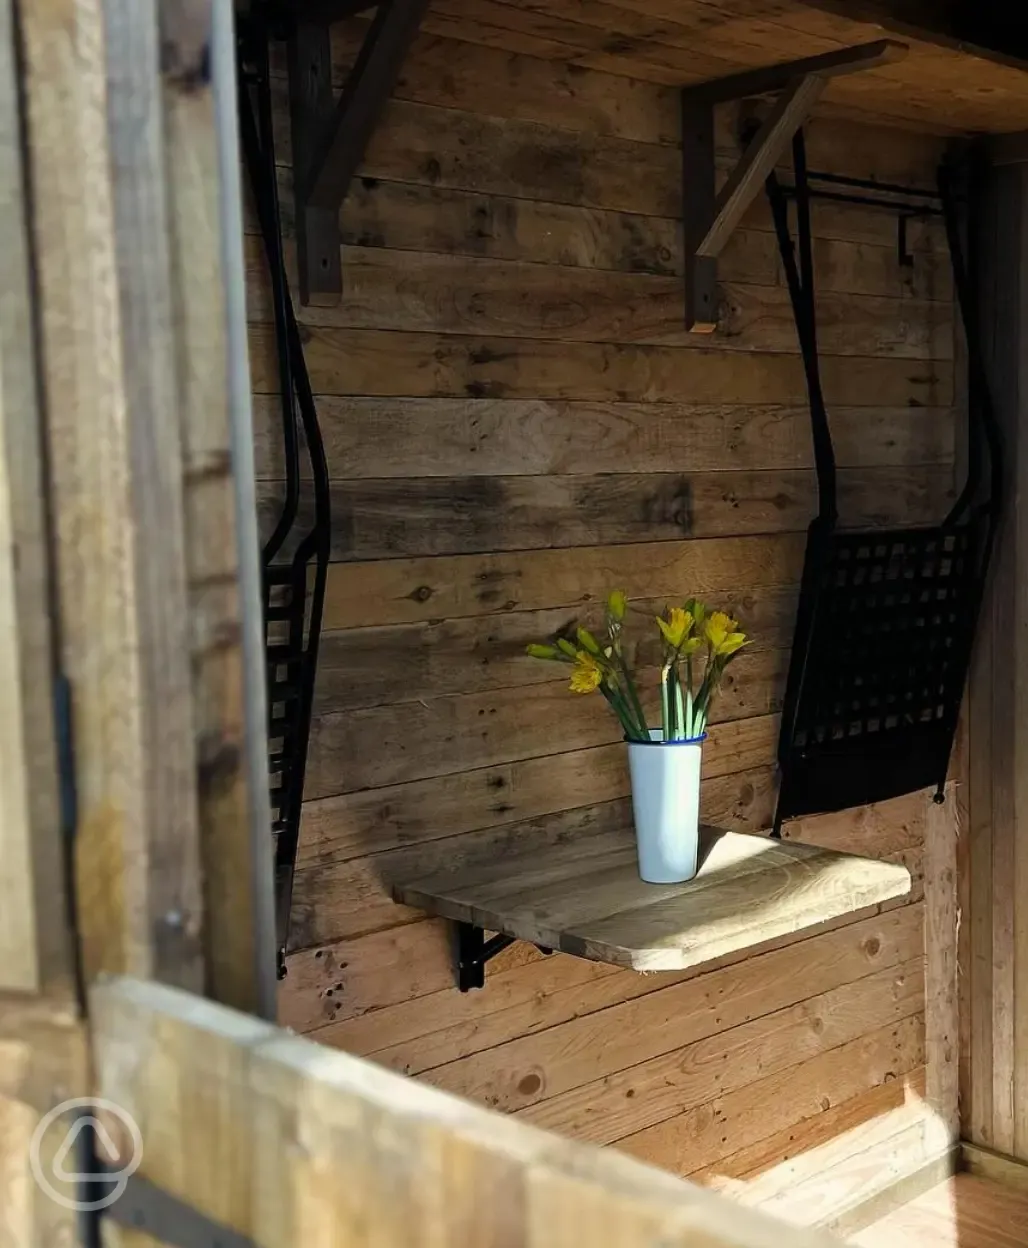 The Badgers Burrow Hut interior